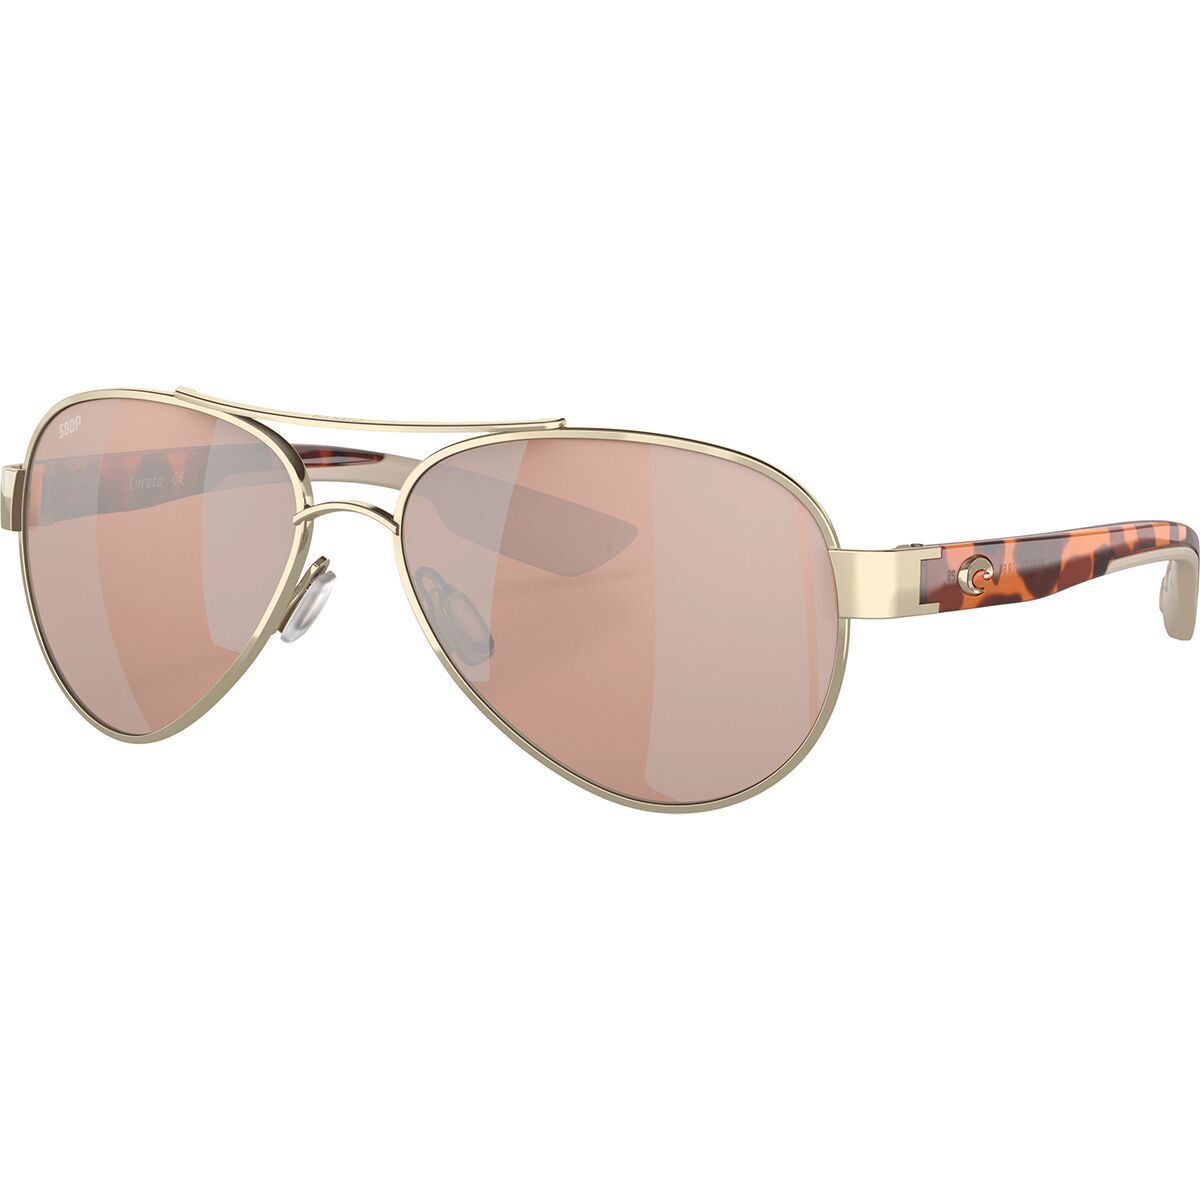 Pre-owned Costa Del Mar Costa Loreto 580p Polarized Sunglasses In Rose Gold Frame/tortoise Temples Frame